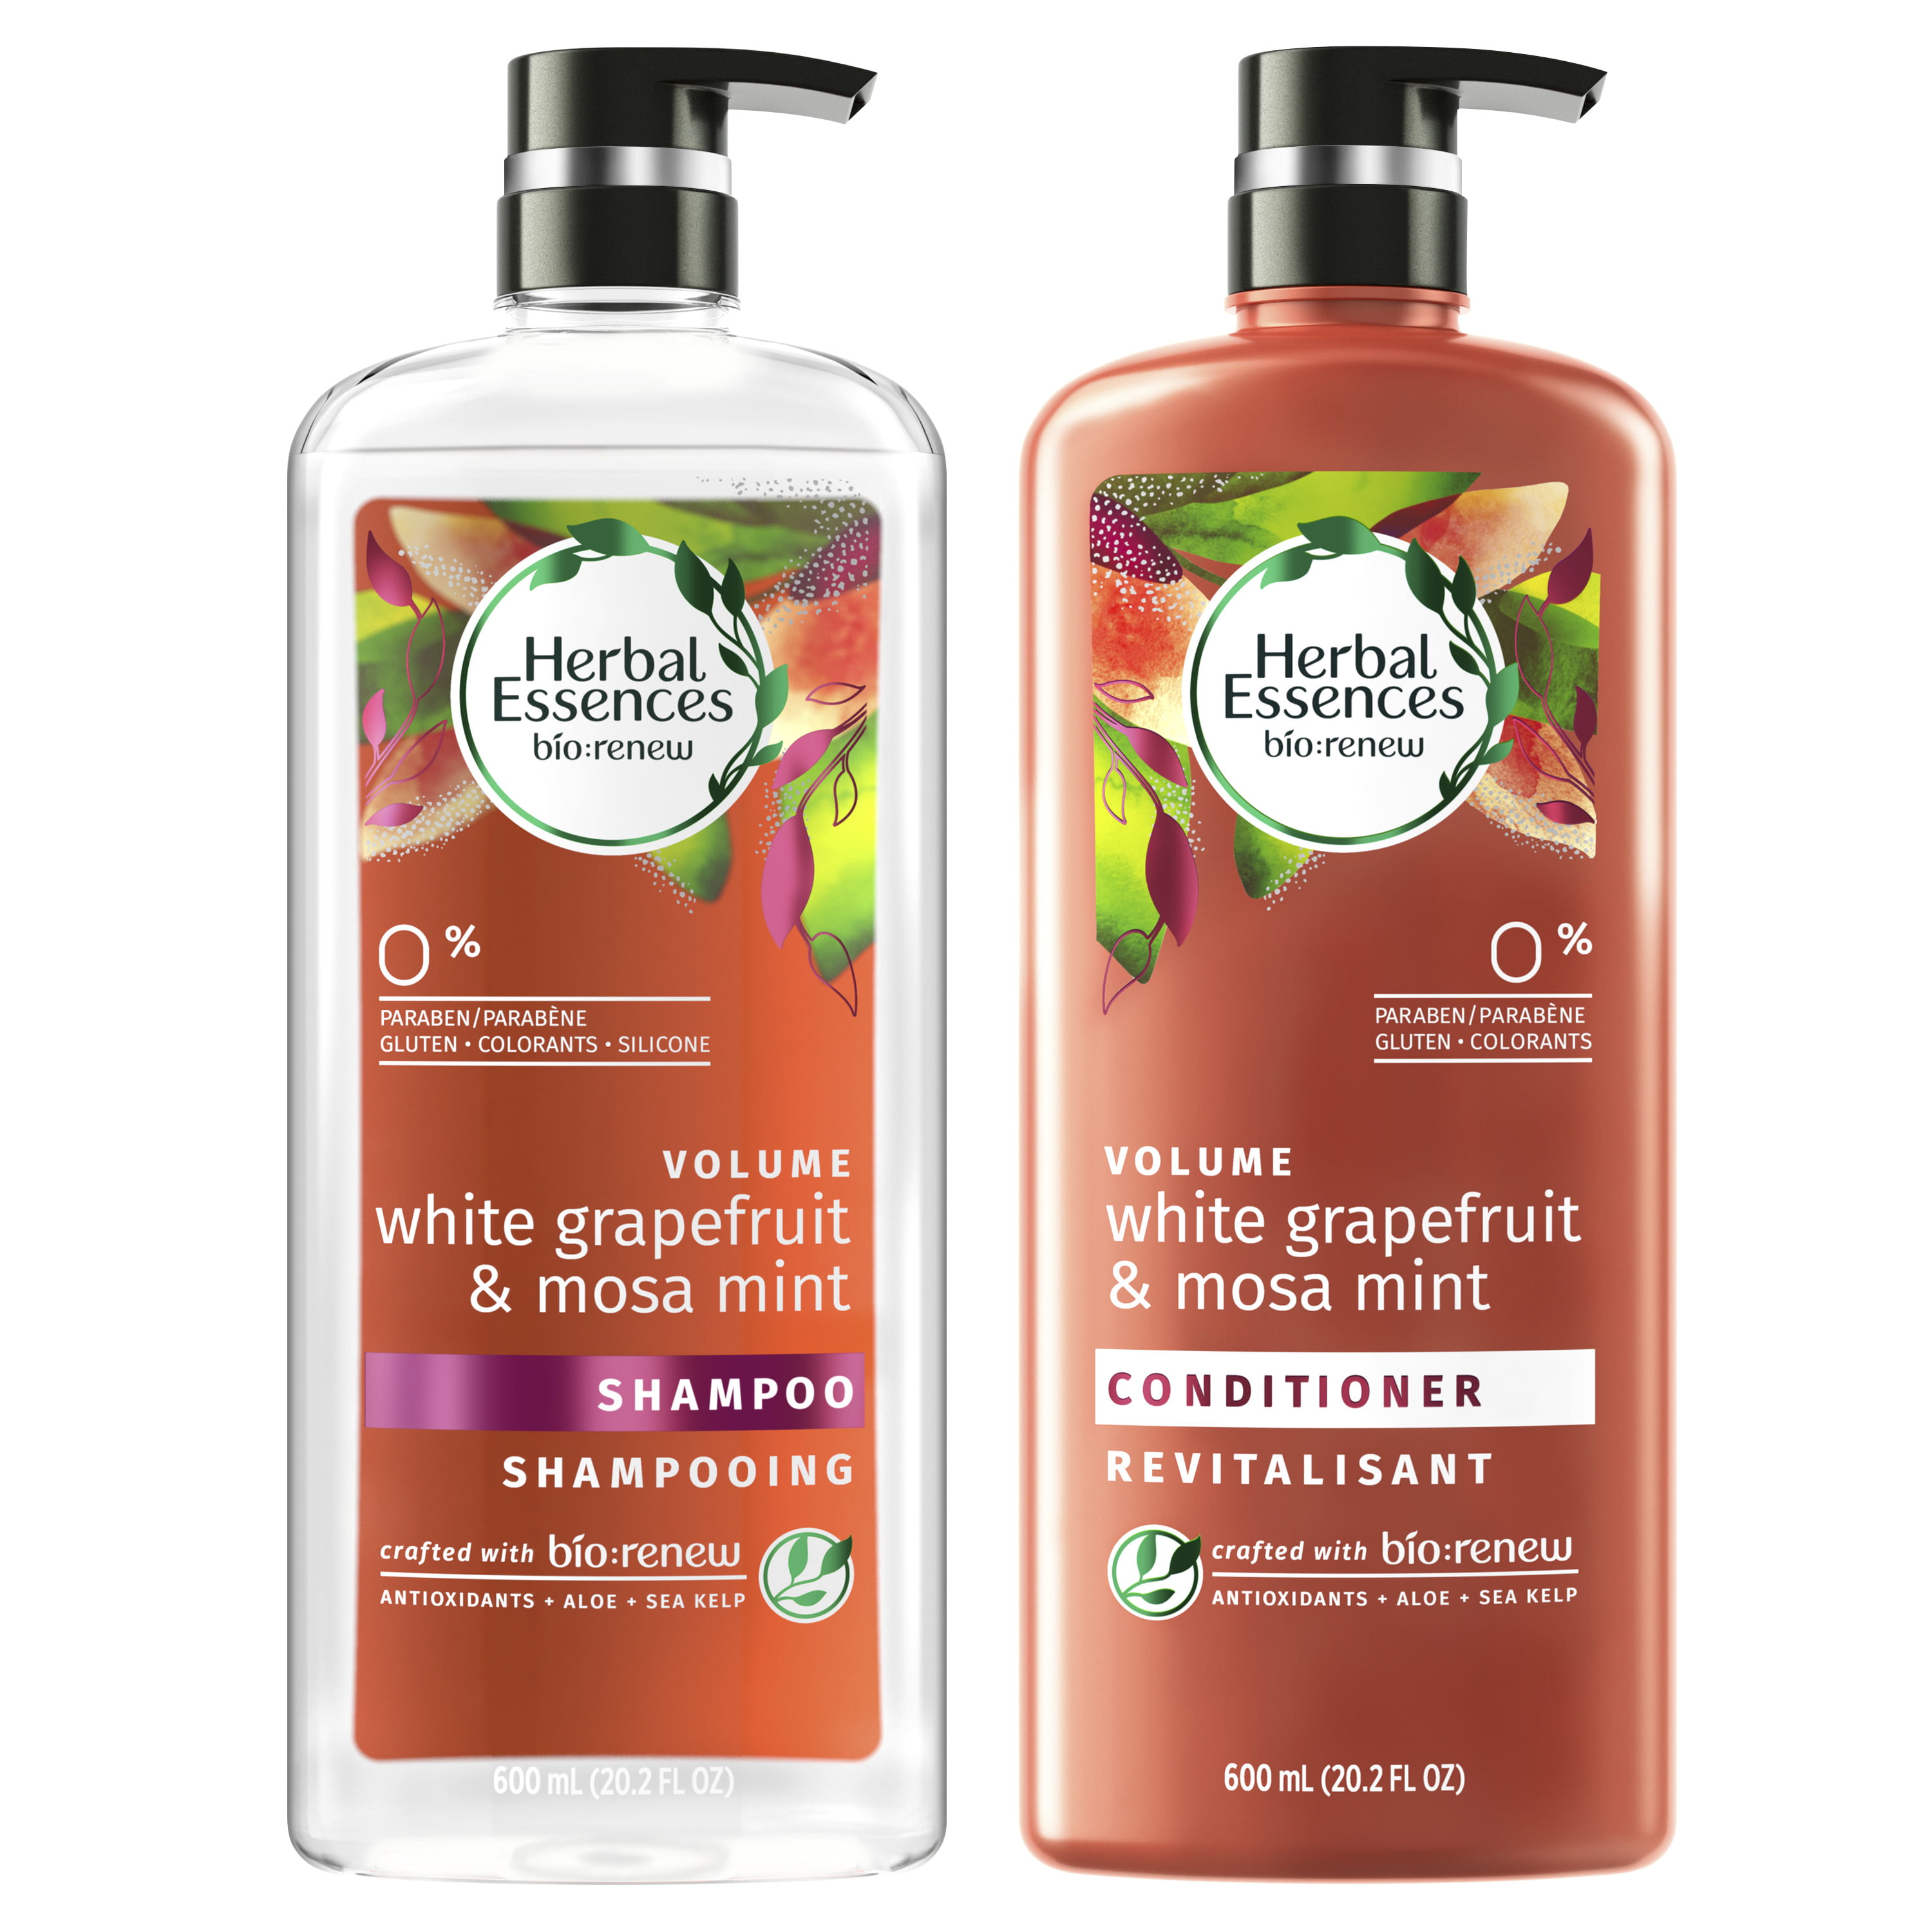 Herbal Essences bio:renew White Grapefruit &#38; Mosa Mint Shampoo and Conditioner Bundle - 40.2 fl oz each